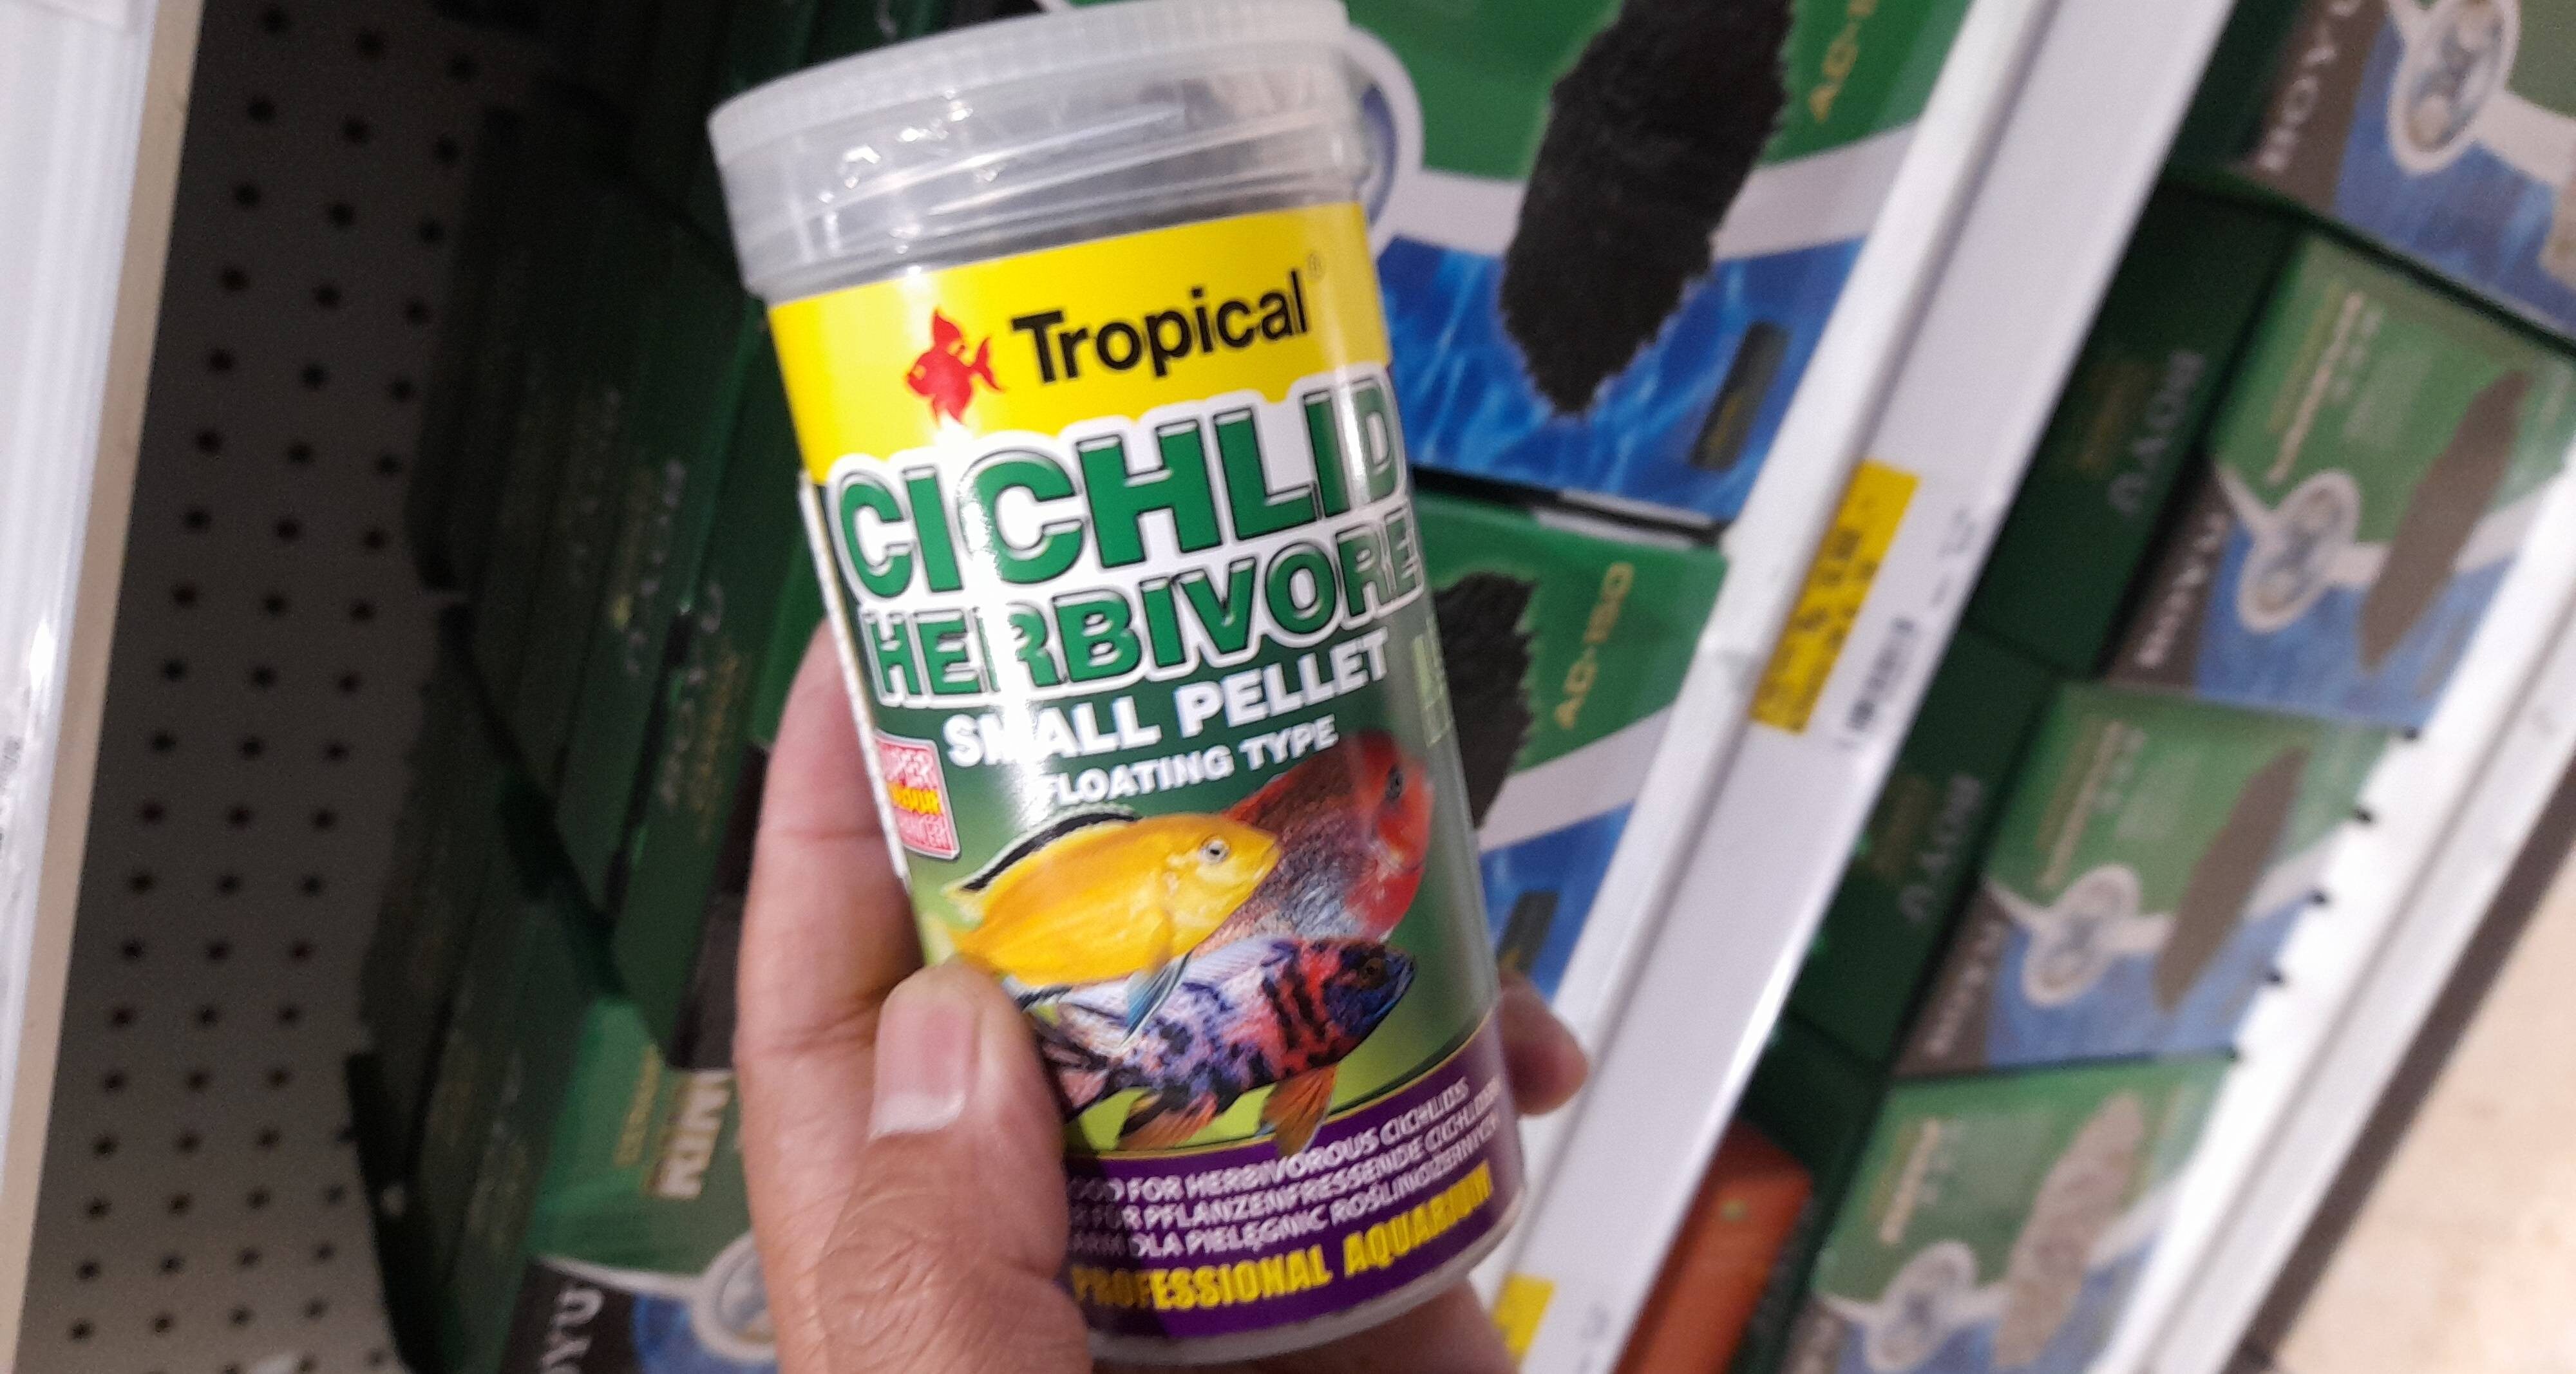 Tropical cichlid herbivore small pellet 250ml - Product - en